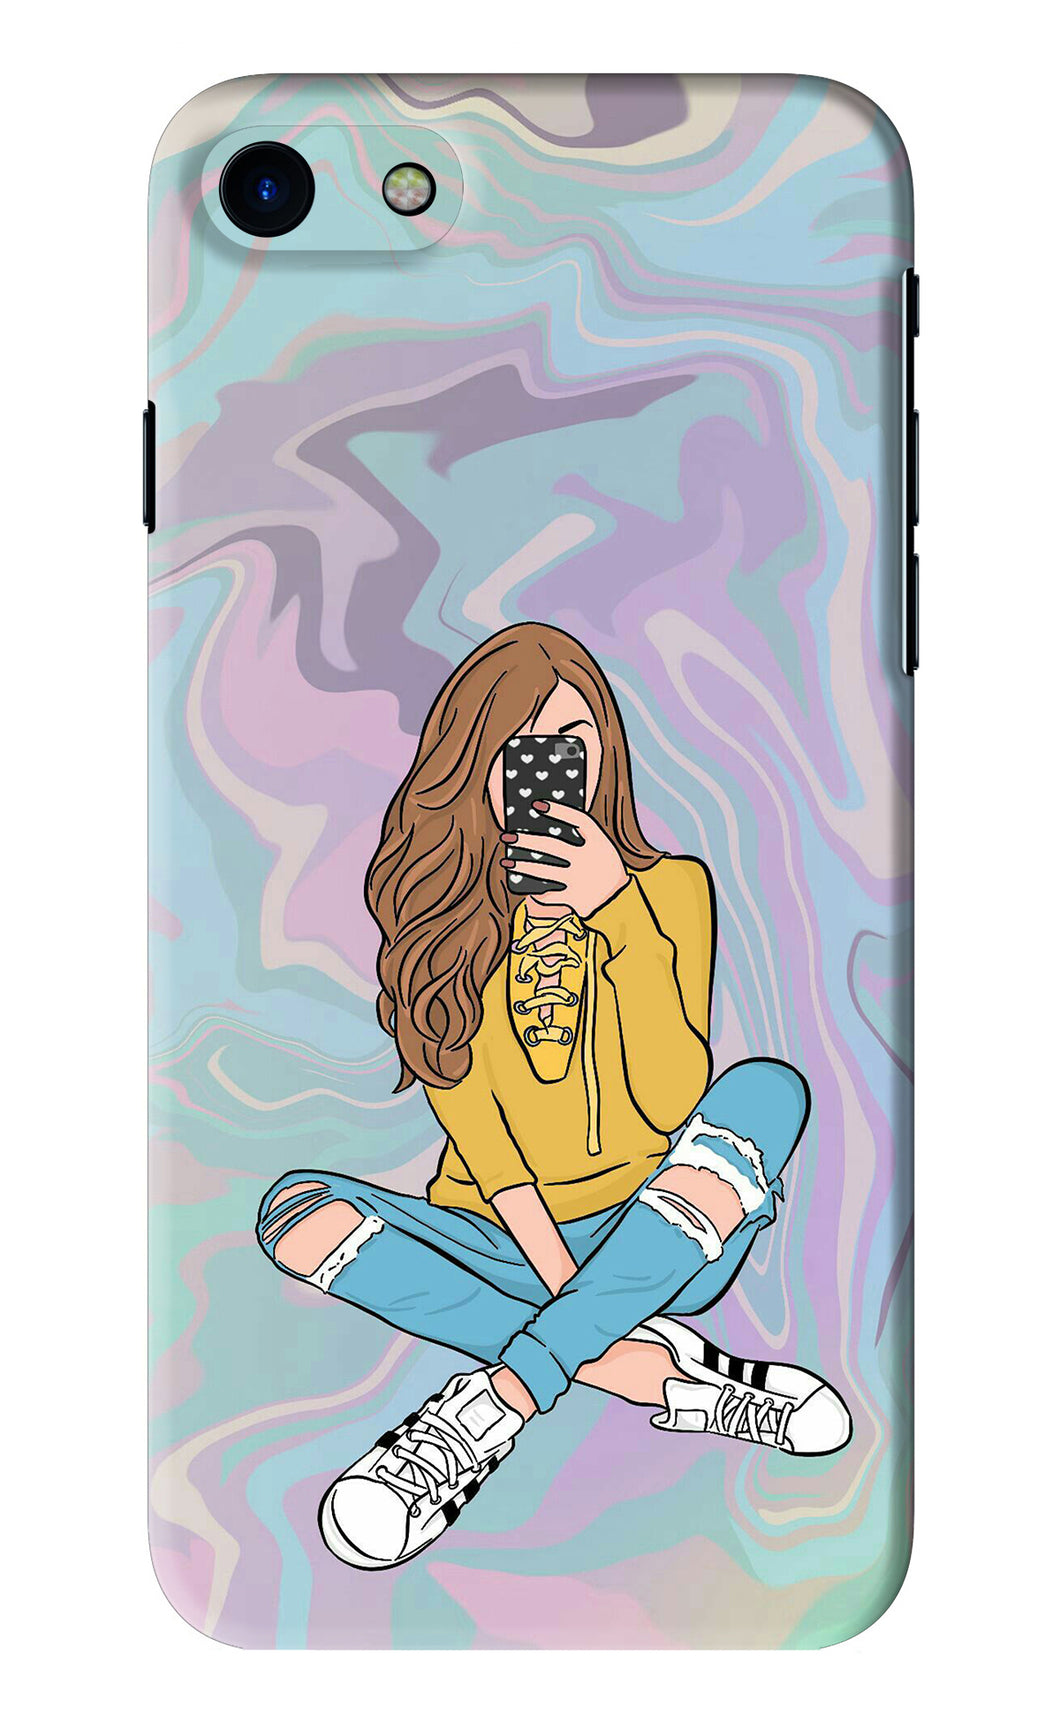 Selfie Girl iPhone 8 Back Skin Wrap